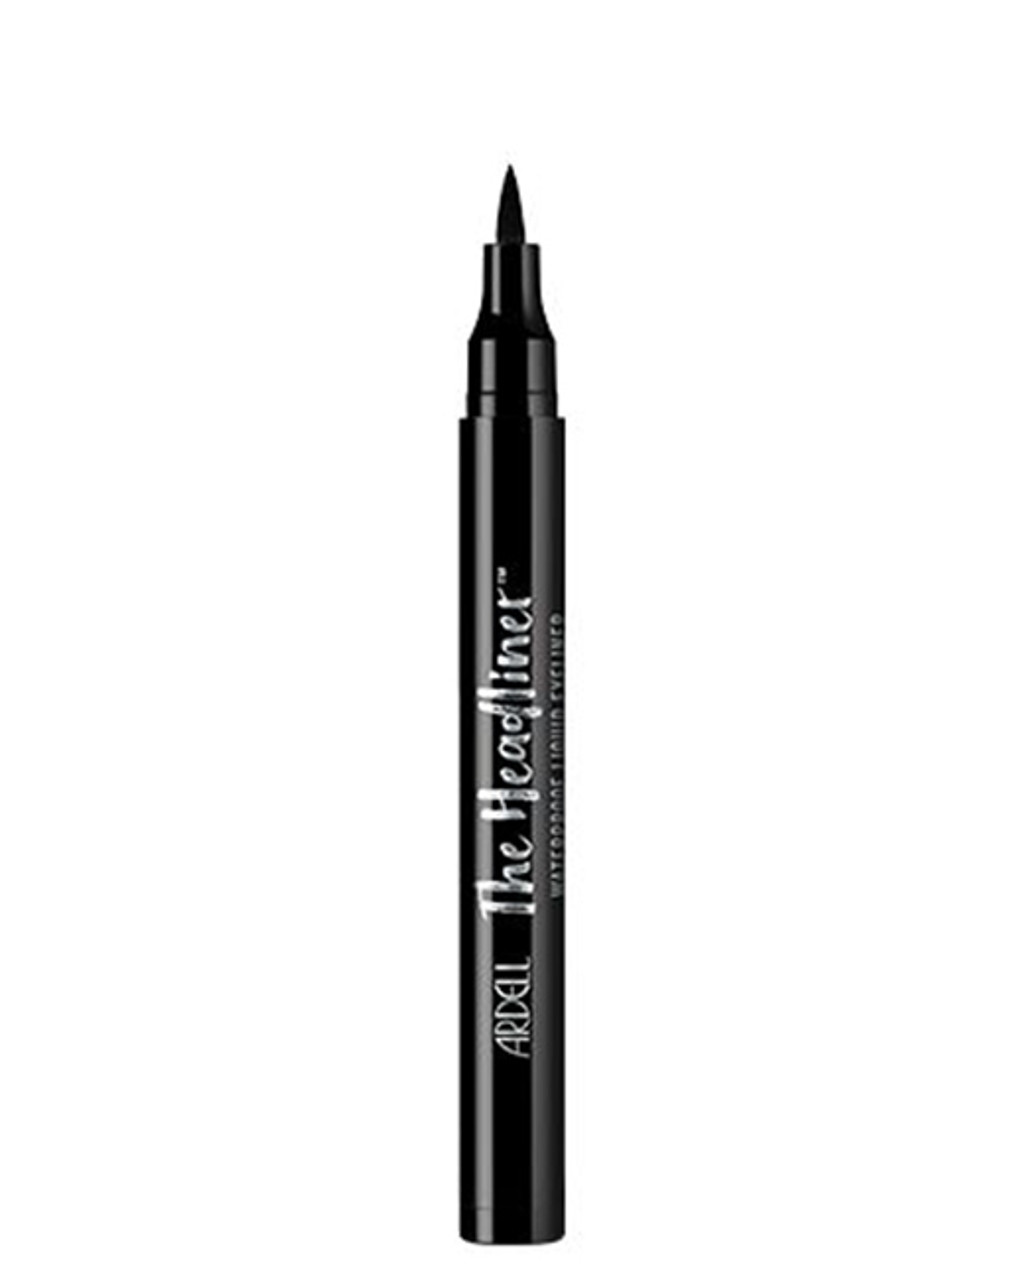 Ardell Beauty The Headliner Waterproof Liquid Eyeliner Luxe Black - 0.04 fl oz / 1.1 mL